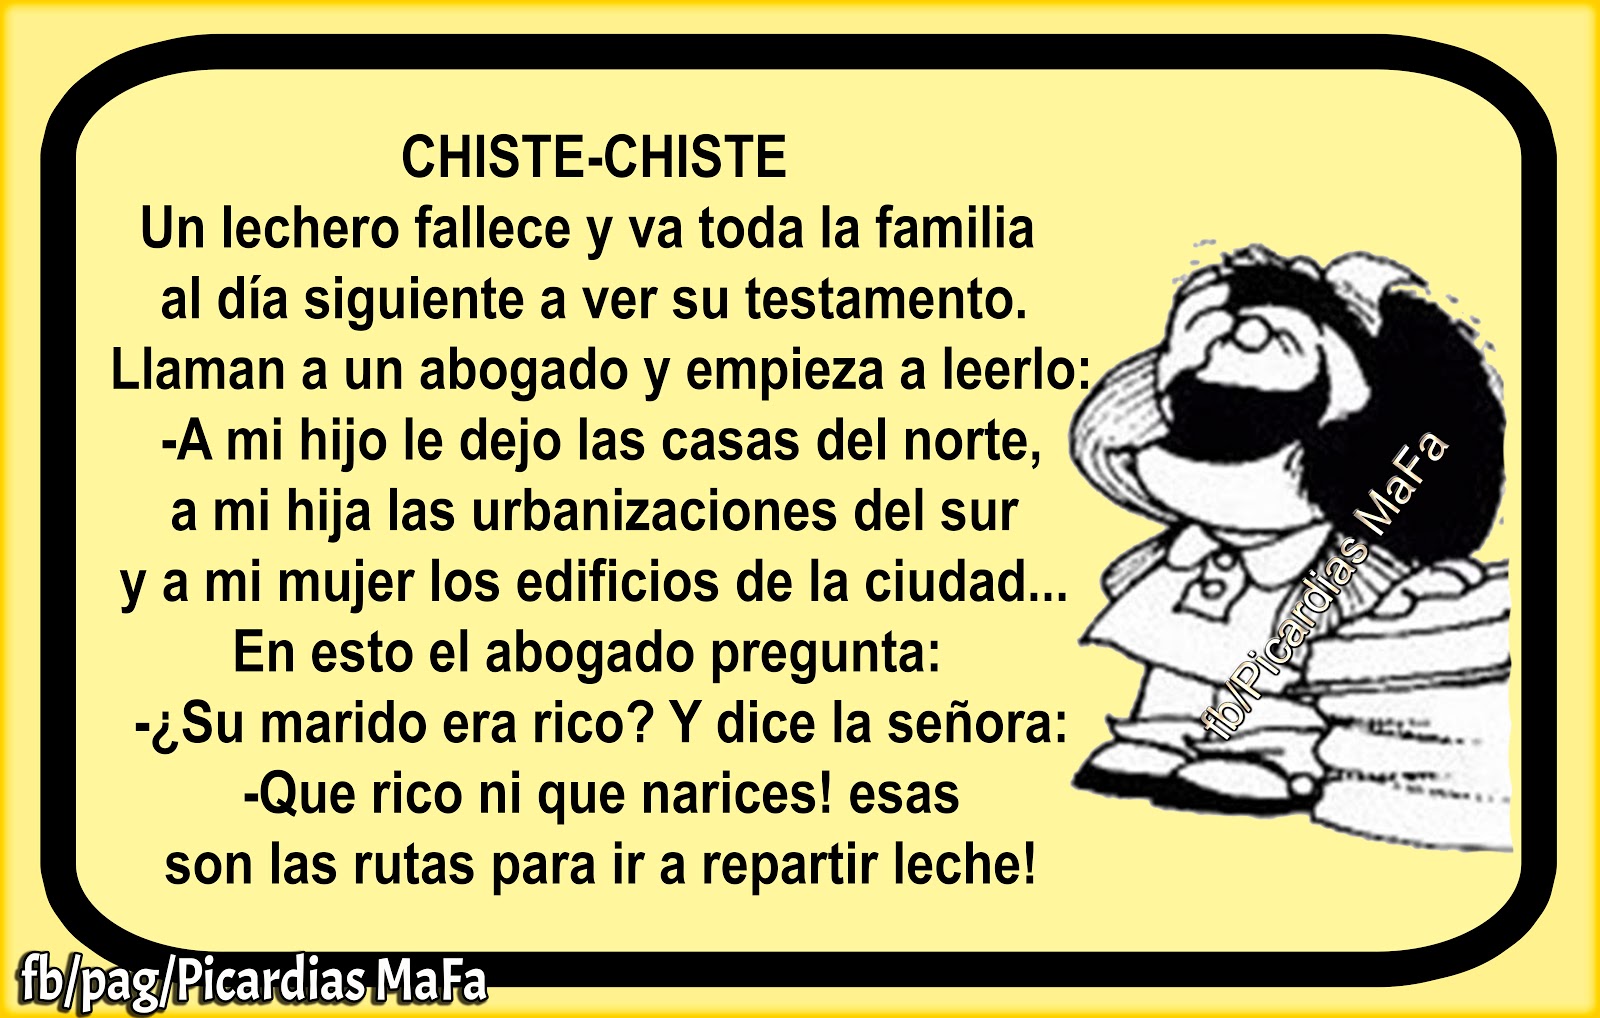 Mundo de Postales: CHISTE-CHISTE